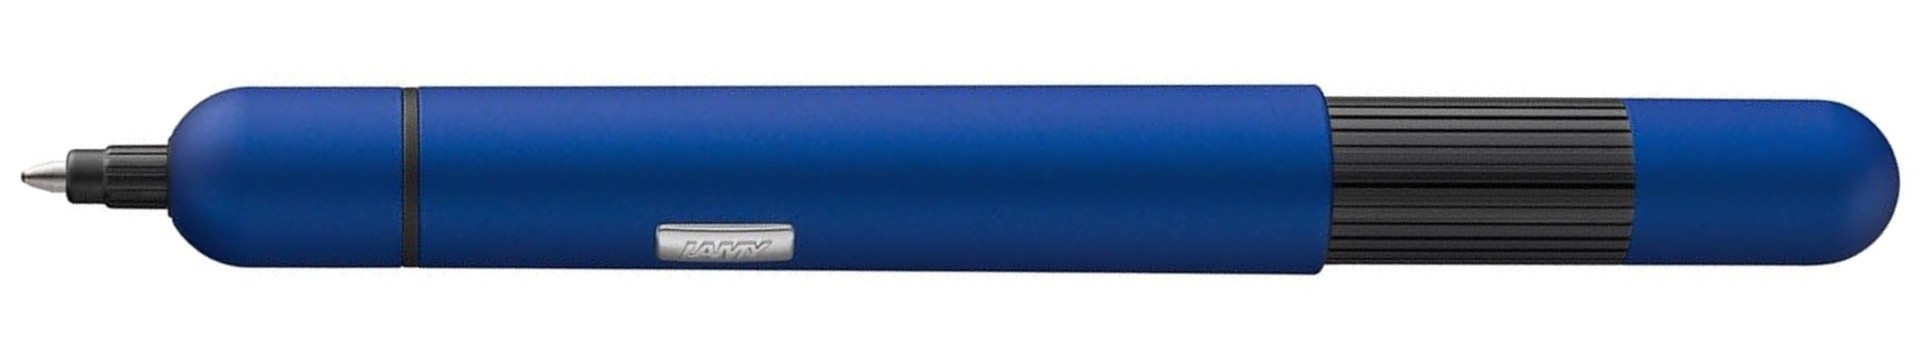 lamy-imperial-blue-pico-ballpoint-pen